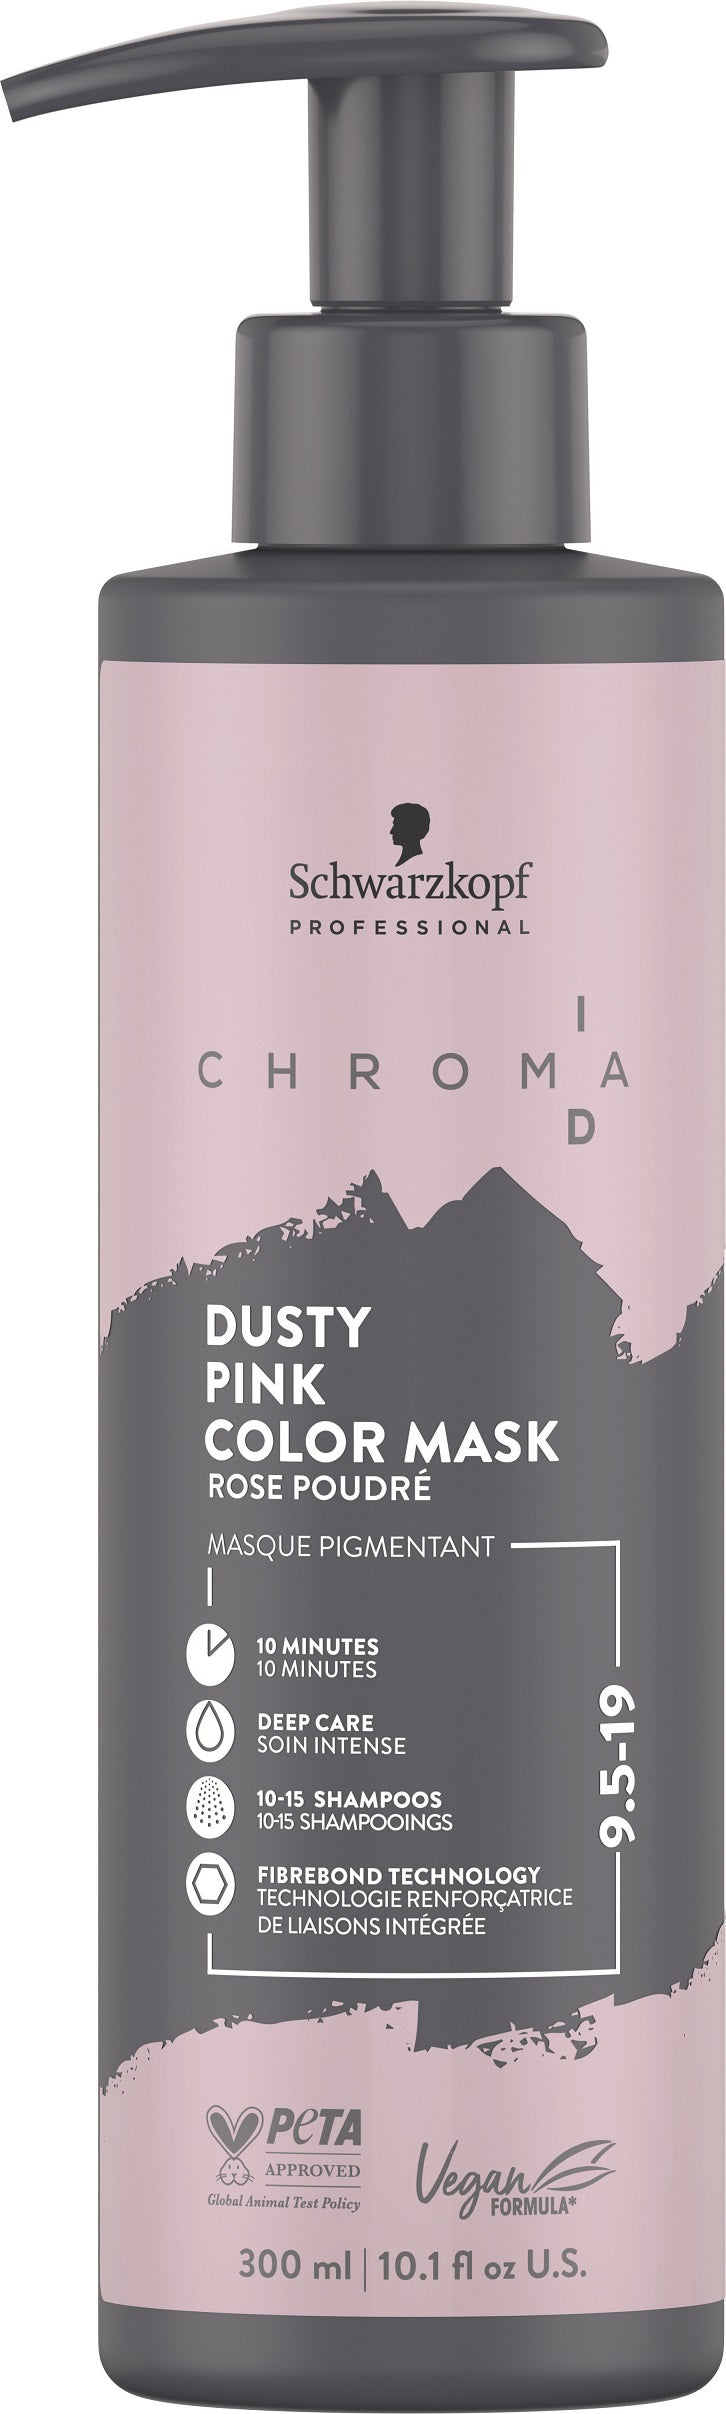 Schwarzkopf Professional Chroma ID 9,5-19 Dusty Pink Bonding Color Mask at Eds Hair Bramhall